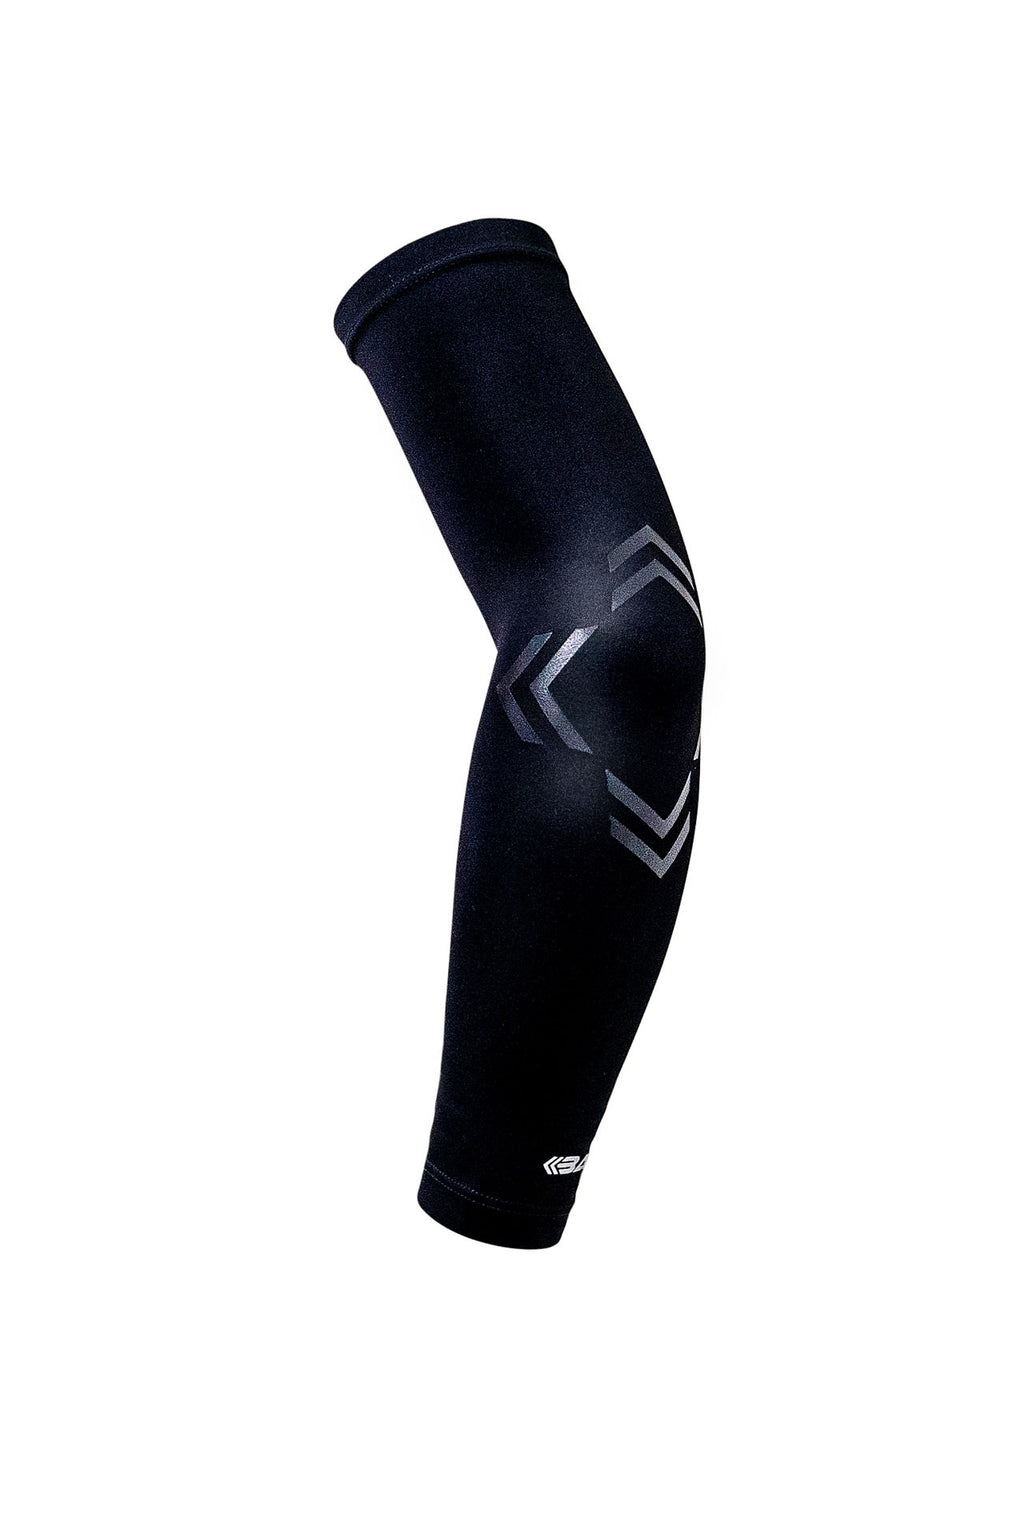 BASE Core Padded Knee Guard (Single) - White – BASE Compression